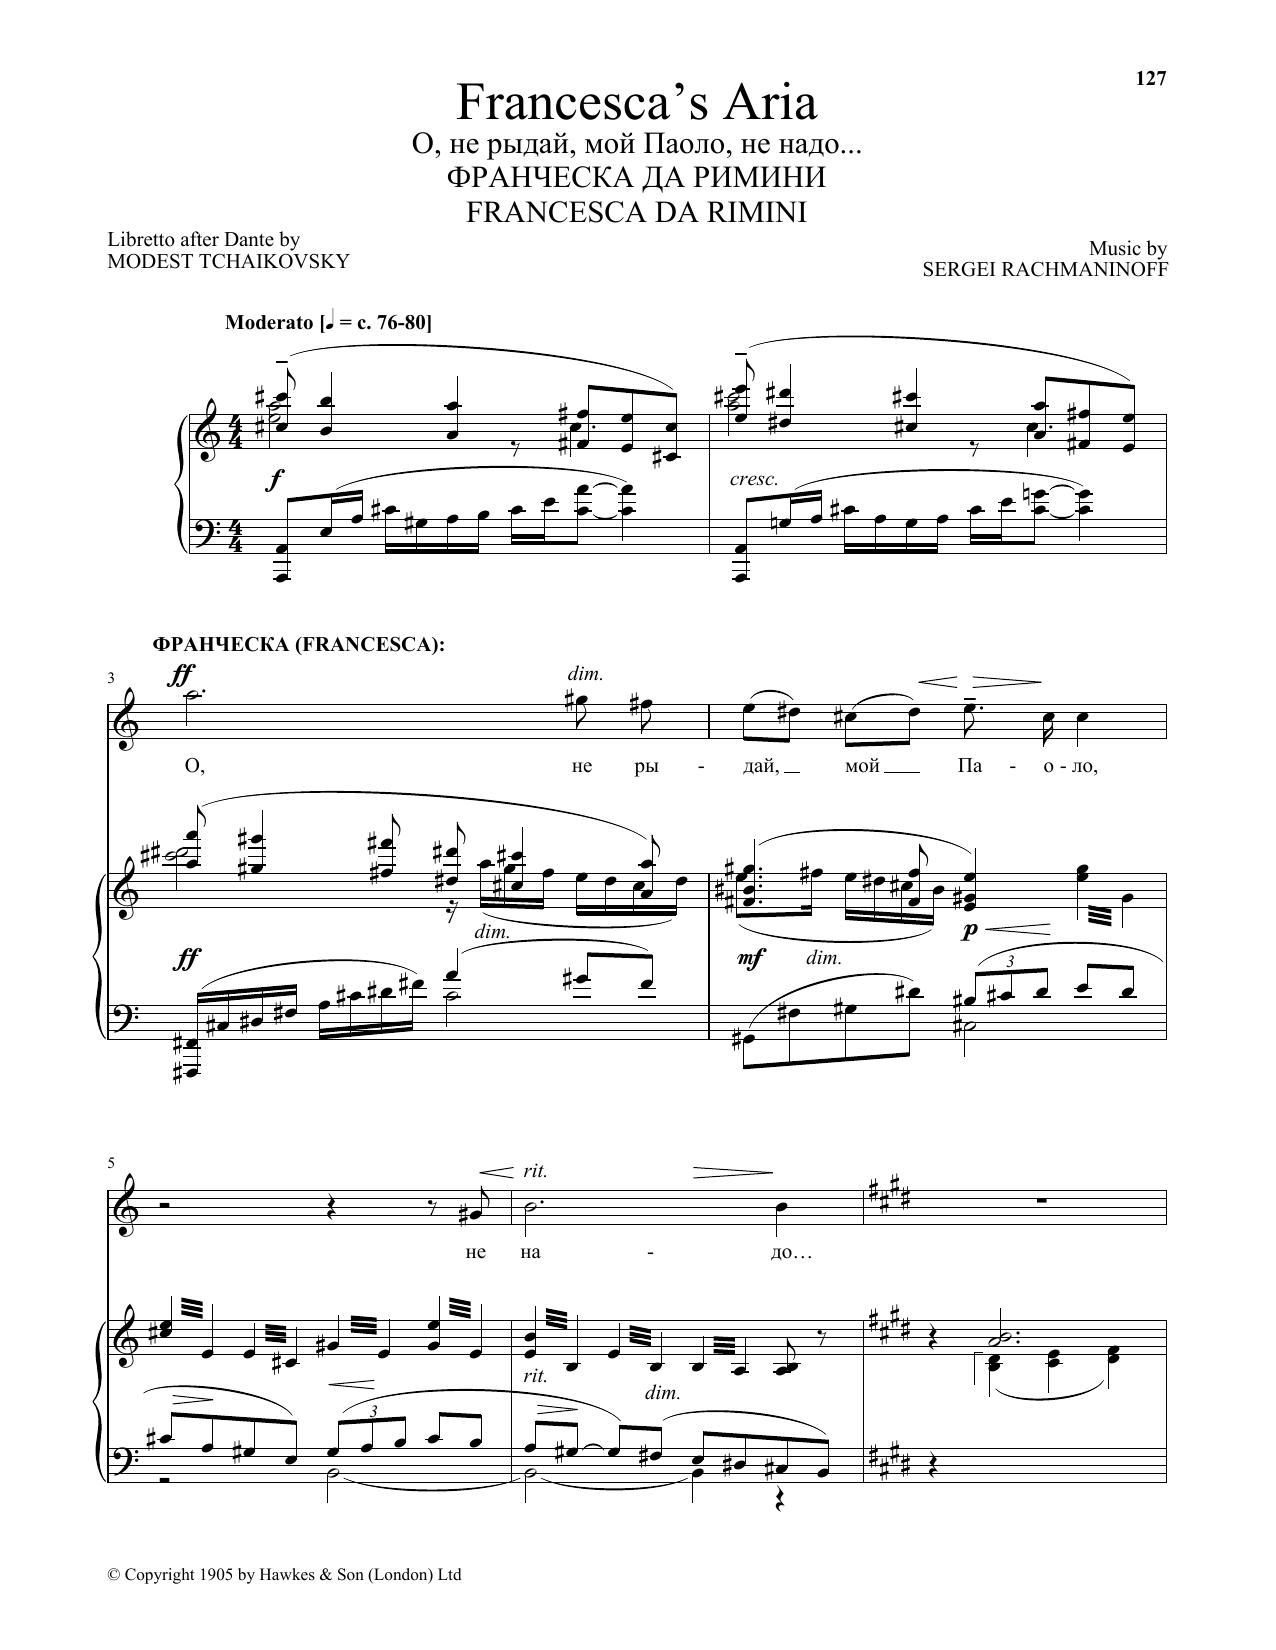 Sergei Rachmaninoff Francesca's Aria (from Francesca da Rimini) sheet music notes and chords arranged for Piano & Vocal